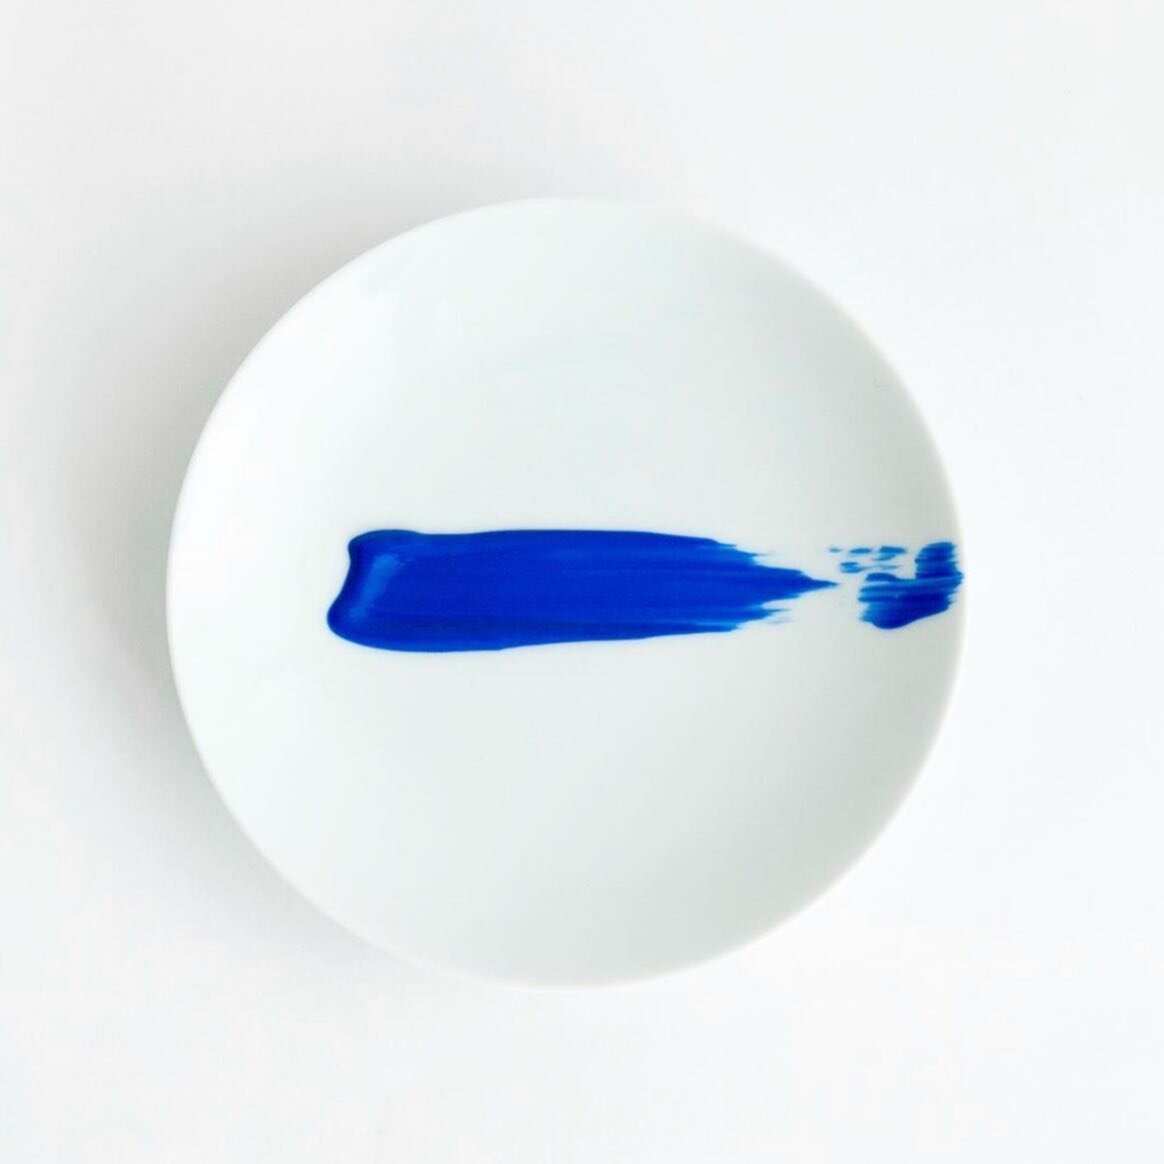 Blue stroke 
Photo credit: @supermamasg
.
.
#blue #asianart #art #singapore #ceramics #ophalos #paint #inspiration #plate #supermamasg #graphic #brush #brushstrokes #designinspiration #designinspo #artcollector #artwork #painting🎨 #ceramic #ceramica